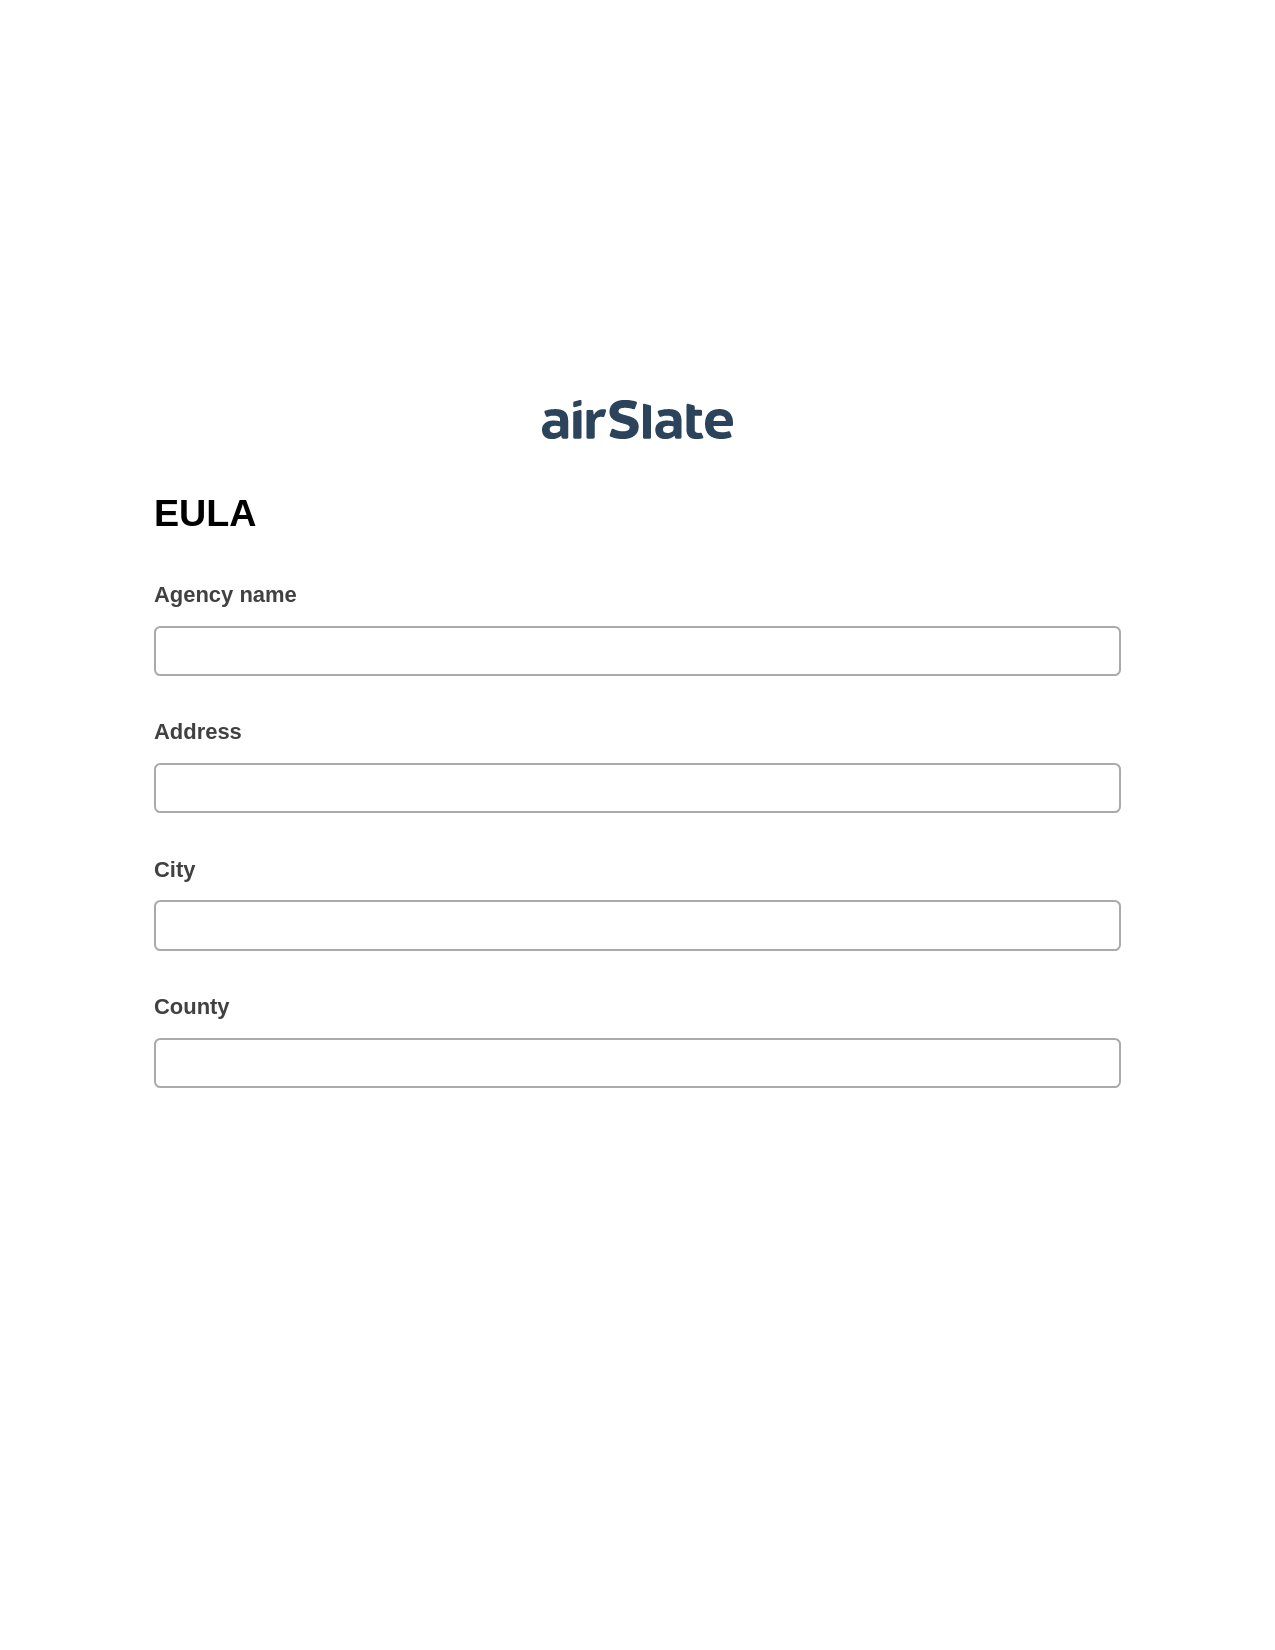 EULA Pre-fill from CSV File Dropdown Options Bot, Document Hide Bot, Slack Notification Postfinish Bot